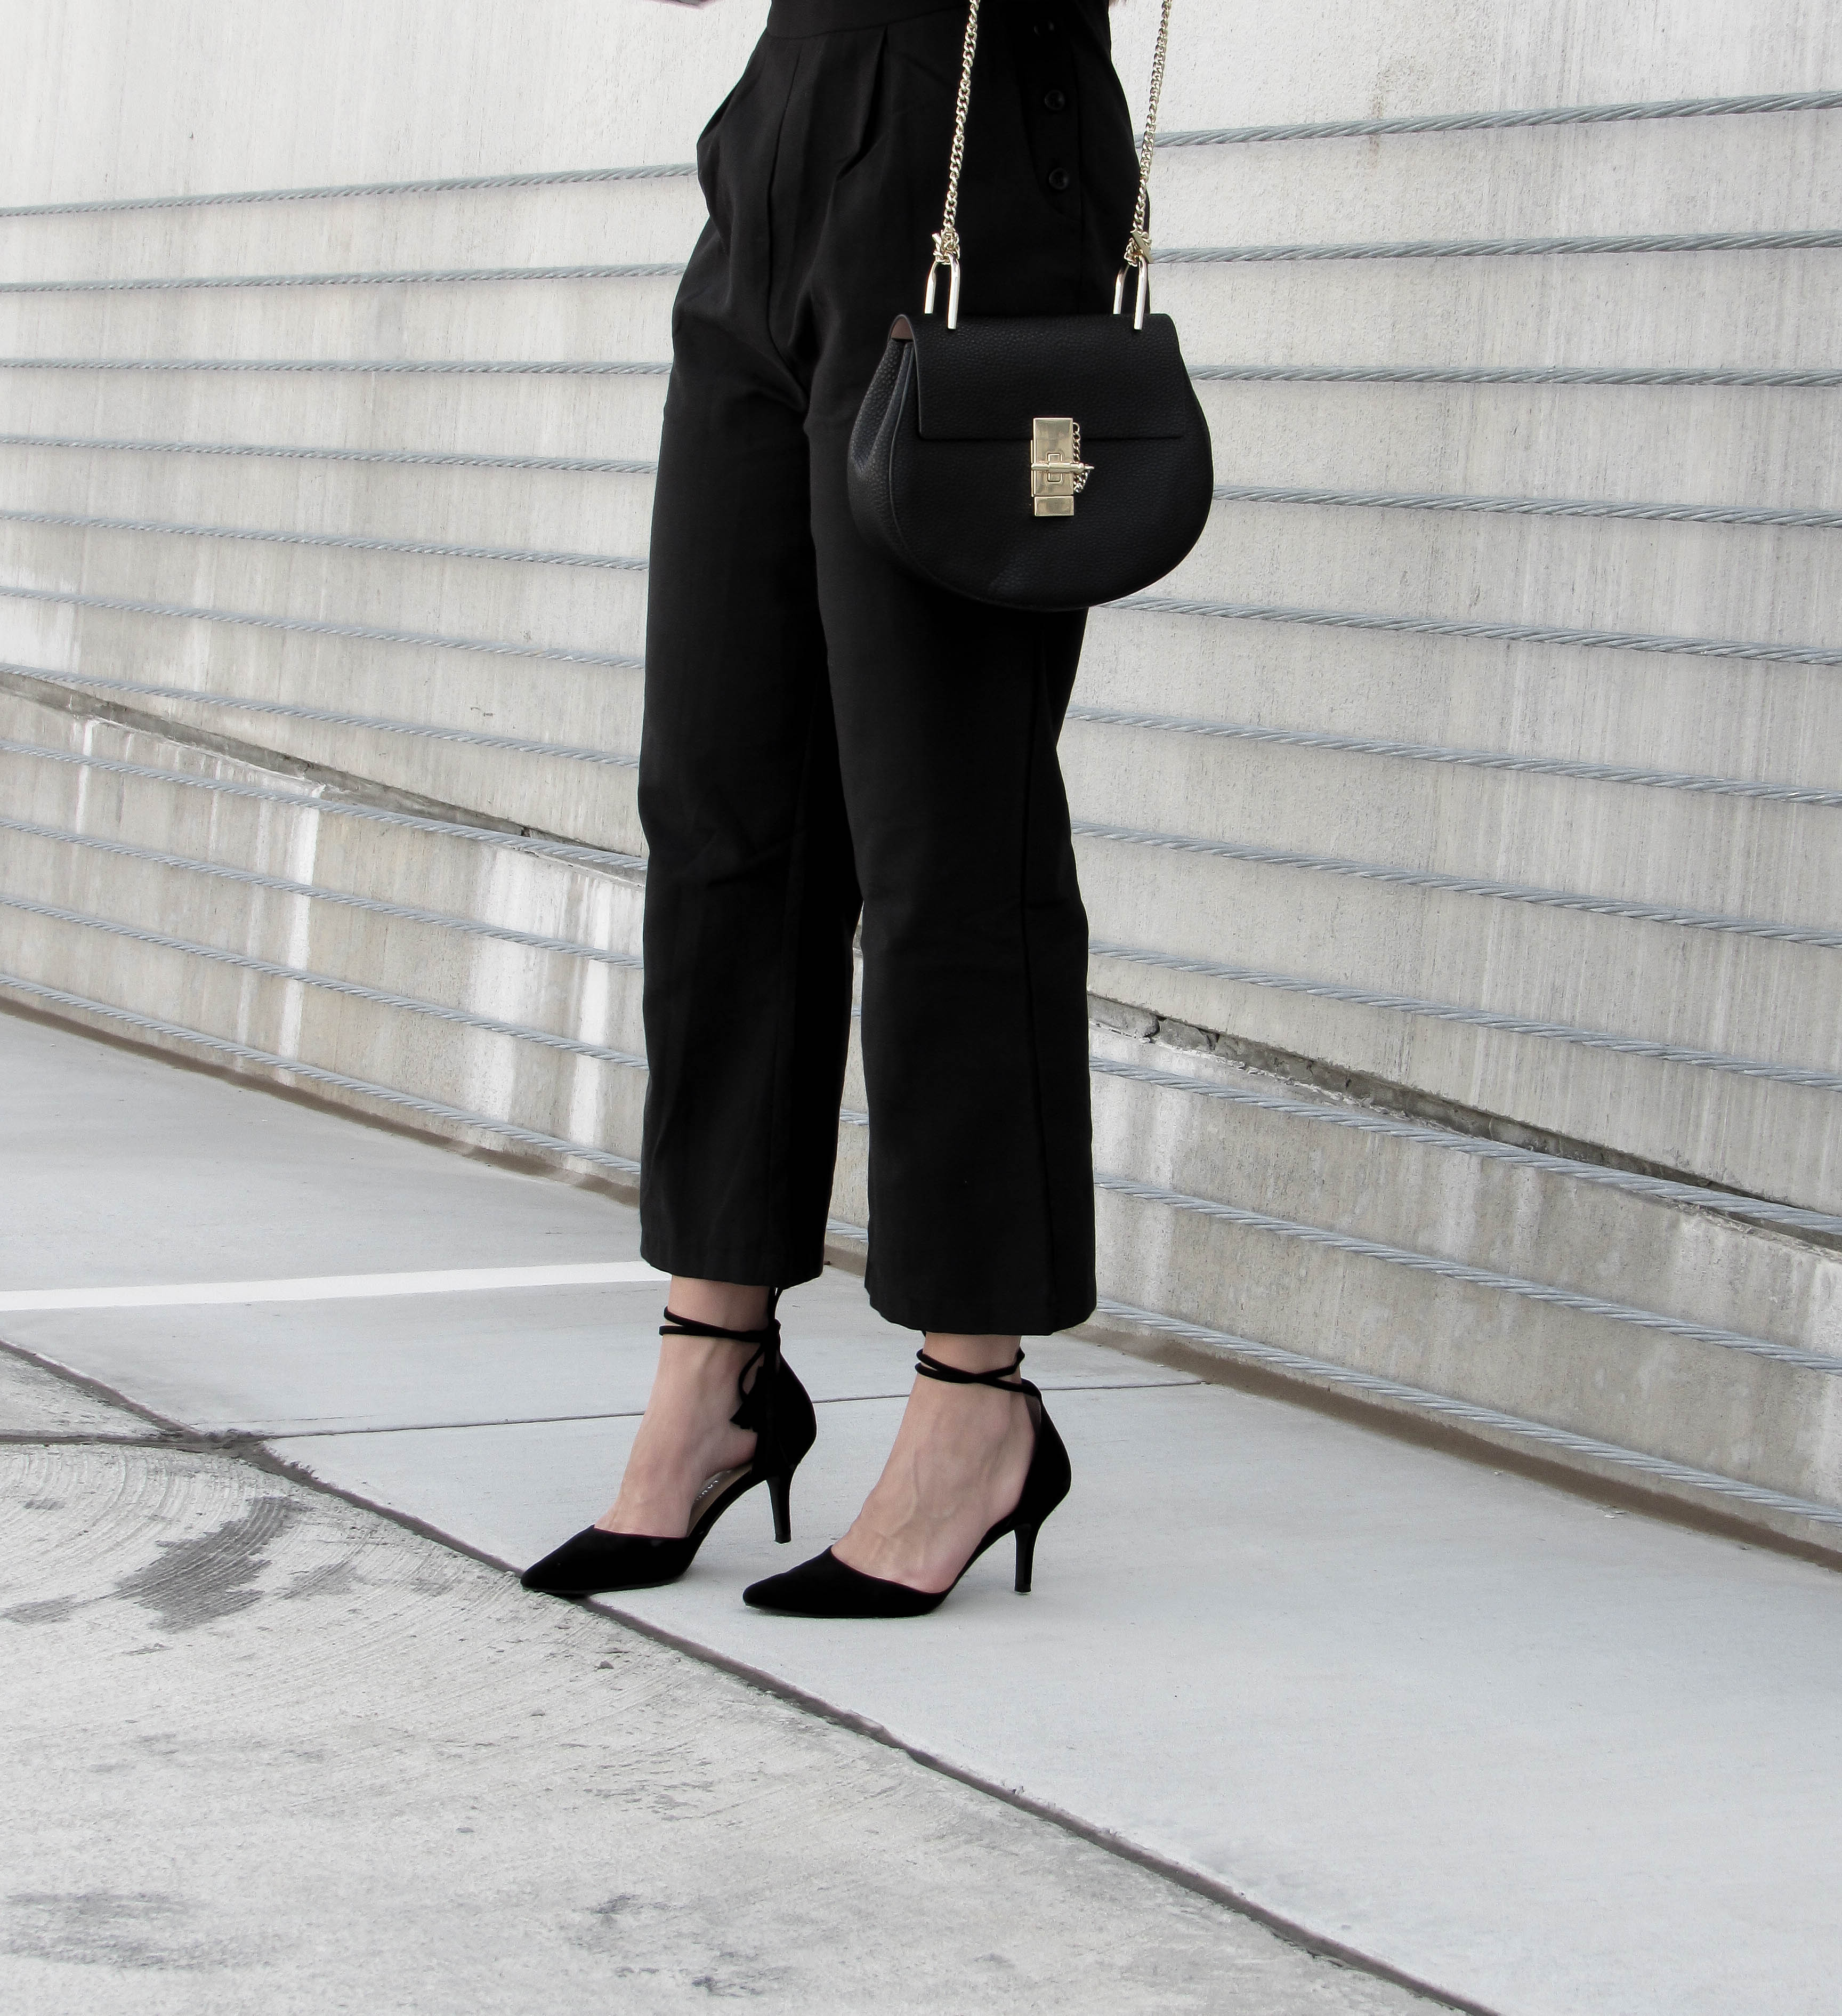 chinese_laundry_black_tassel_heels_outfit_pinterest_blog